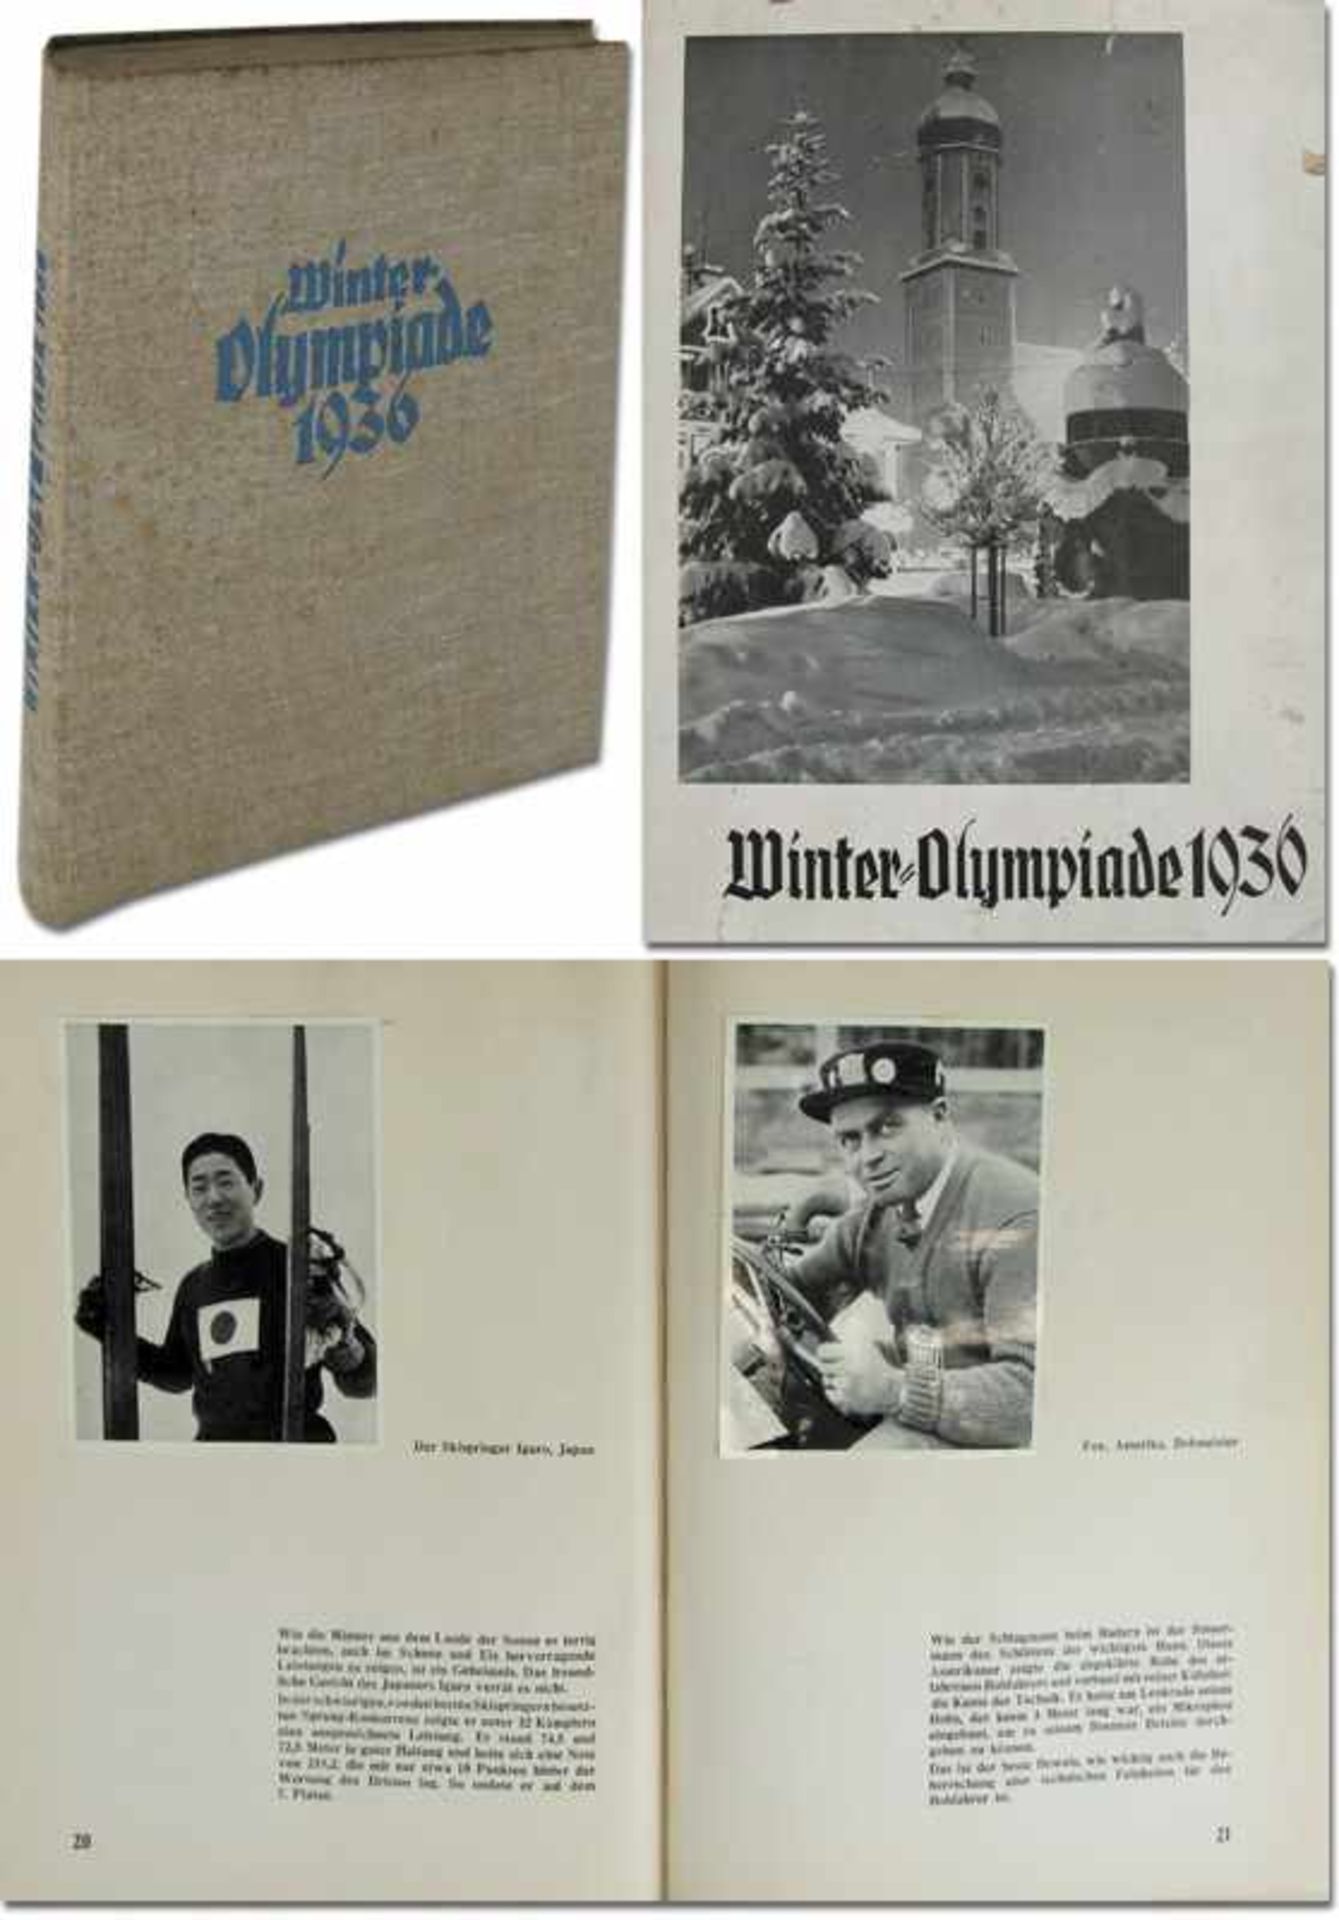 Olympic Winter Games 1936. Collector Cards Yramos - German Collector's Card Album from YRAMOS: